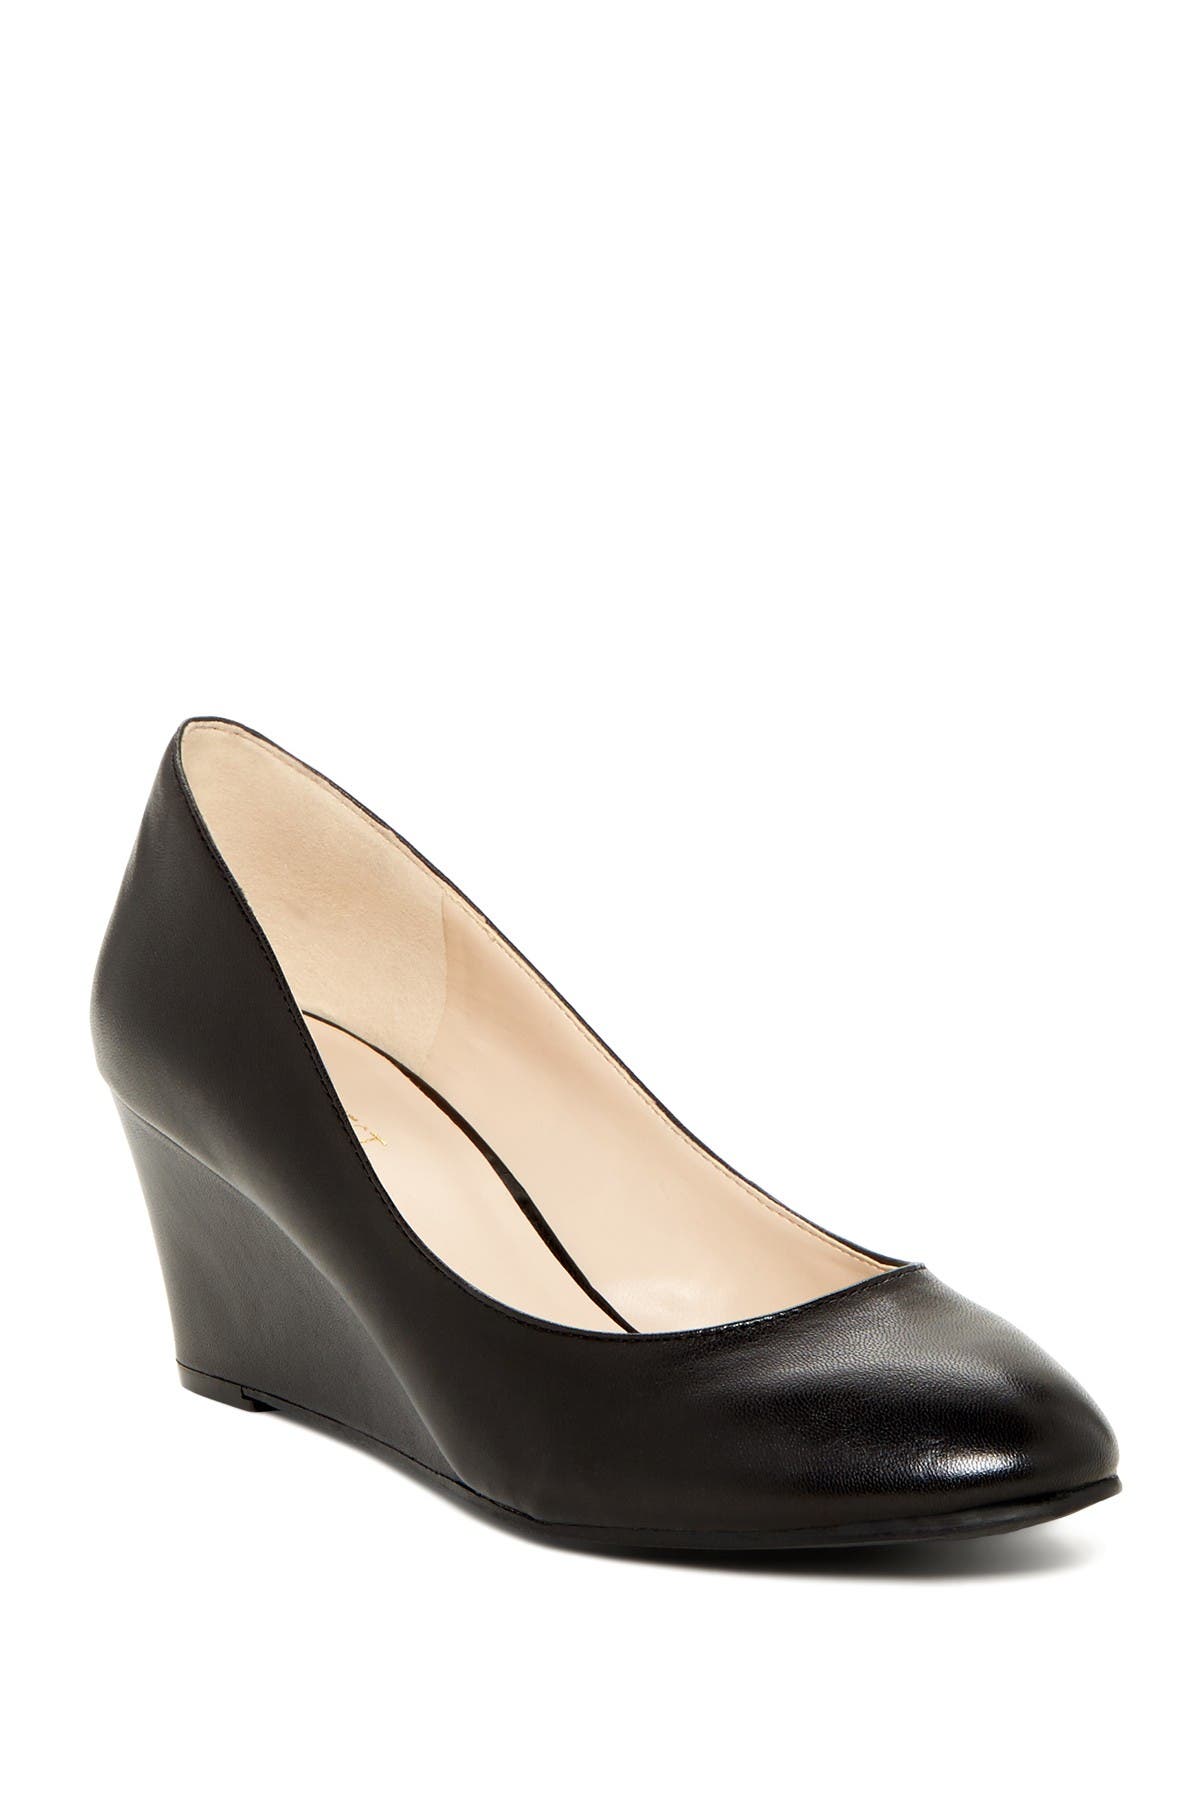 nine west wide width heels